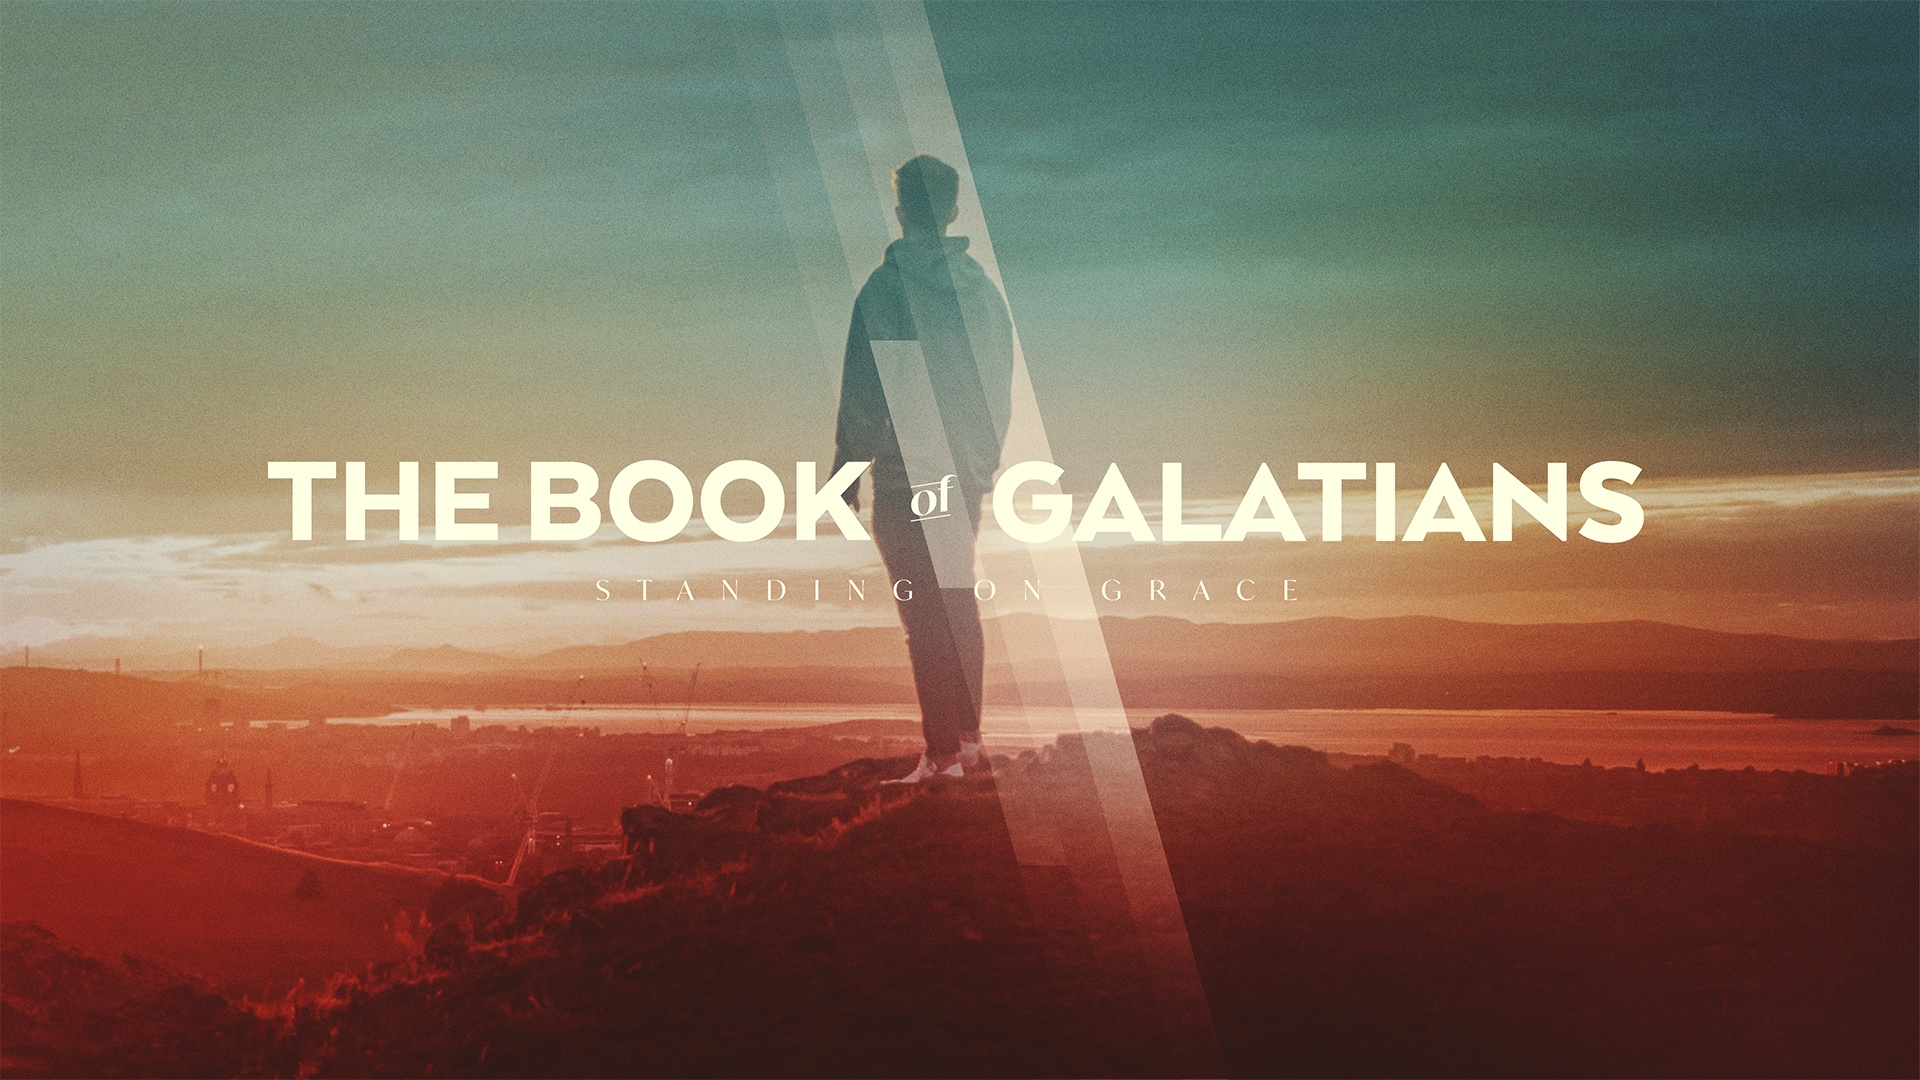 Galatians (Standing on Grace)